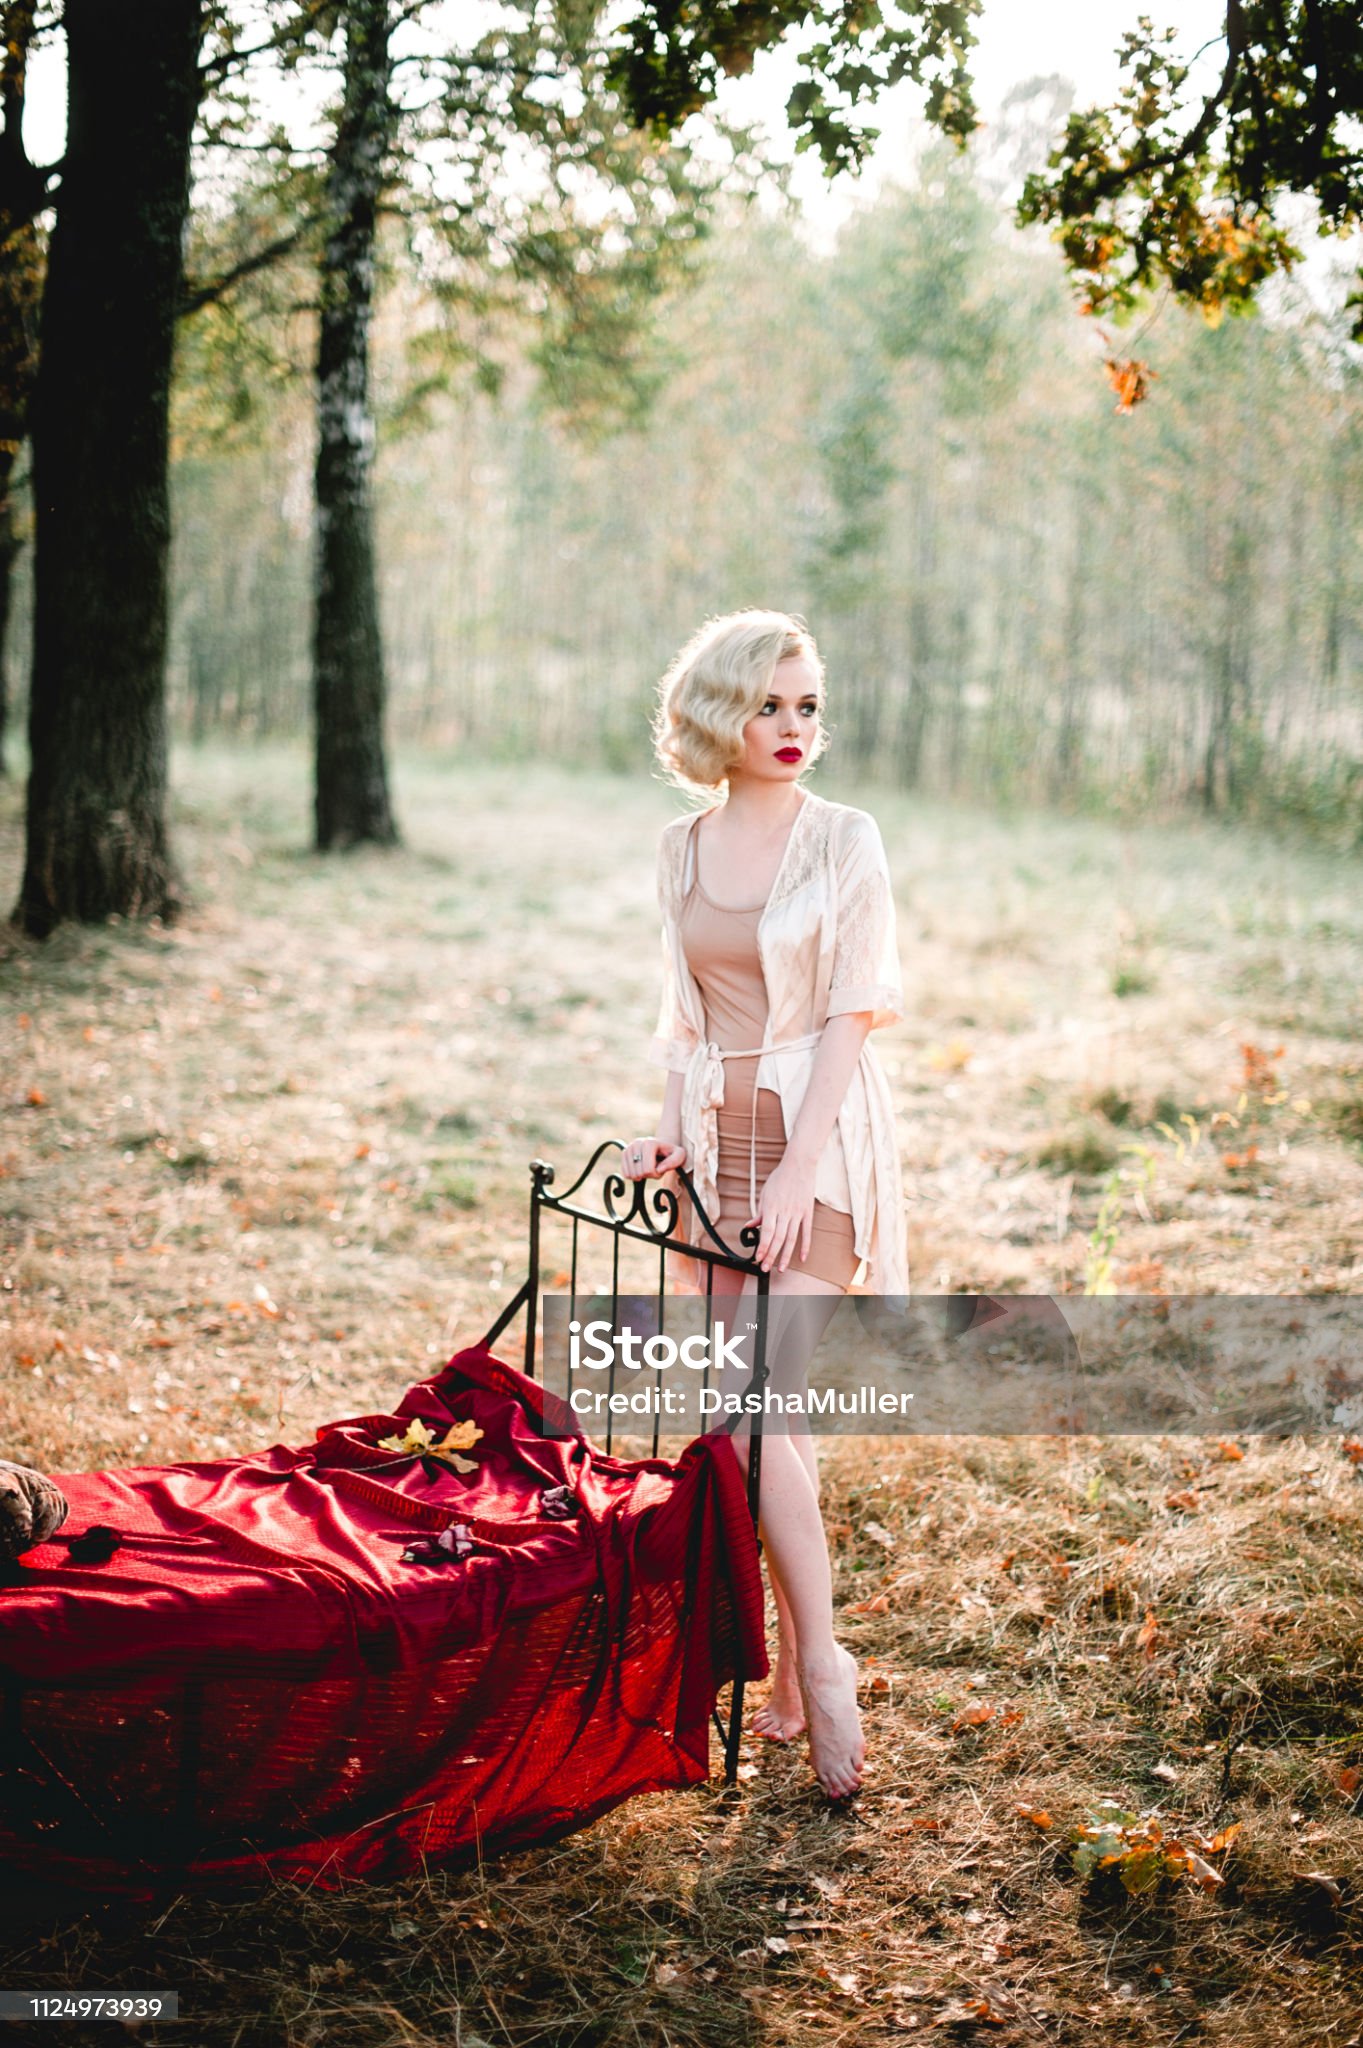 https://media.istockphoto.com/id/1124973939/photo/vintage-blonde-in-nightwear-fashion-forest-setting.jpg?s=2048x2048&amp;w=is&amp;k=20&amp;c=lKDJuHfXkzisEYmkVxwZR14q_i9KTjUrZymwkoTsNUE=